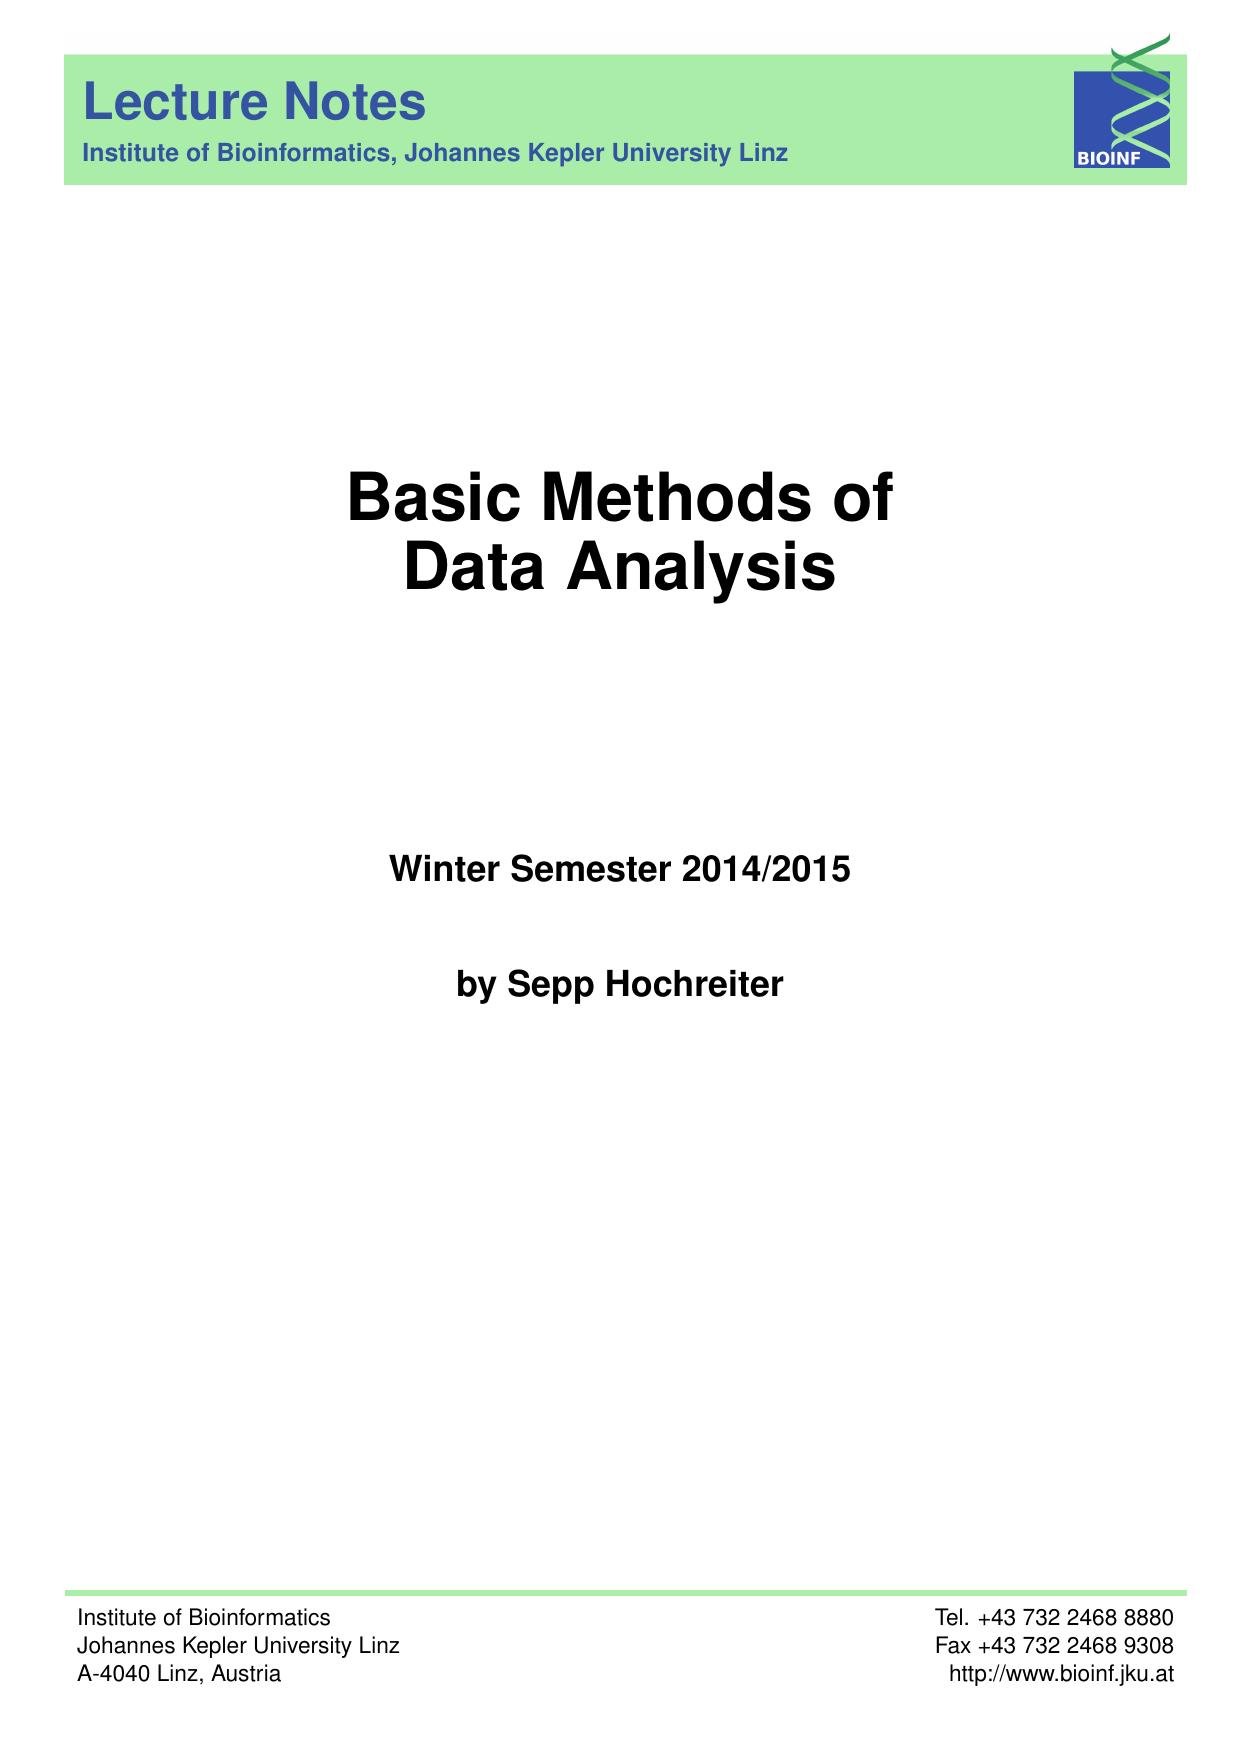 Basic Methods of Data Analysis 2014